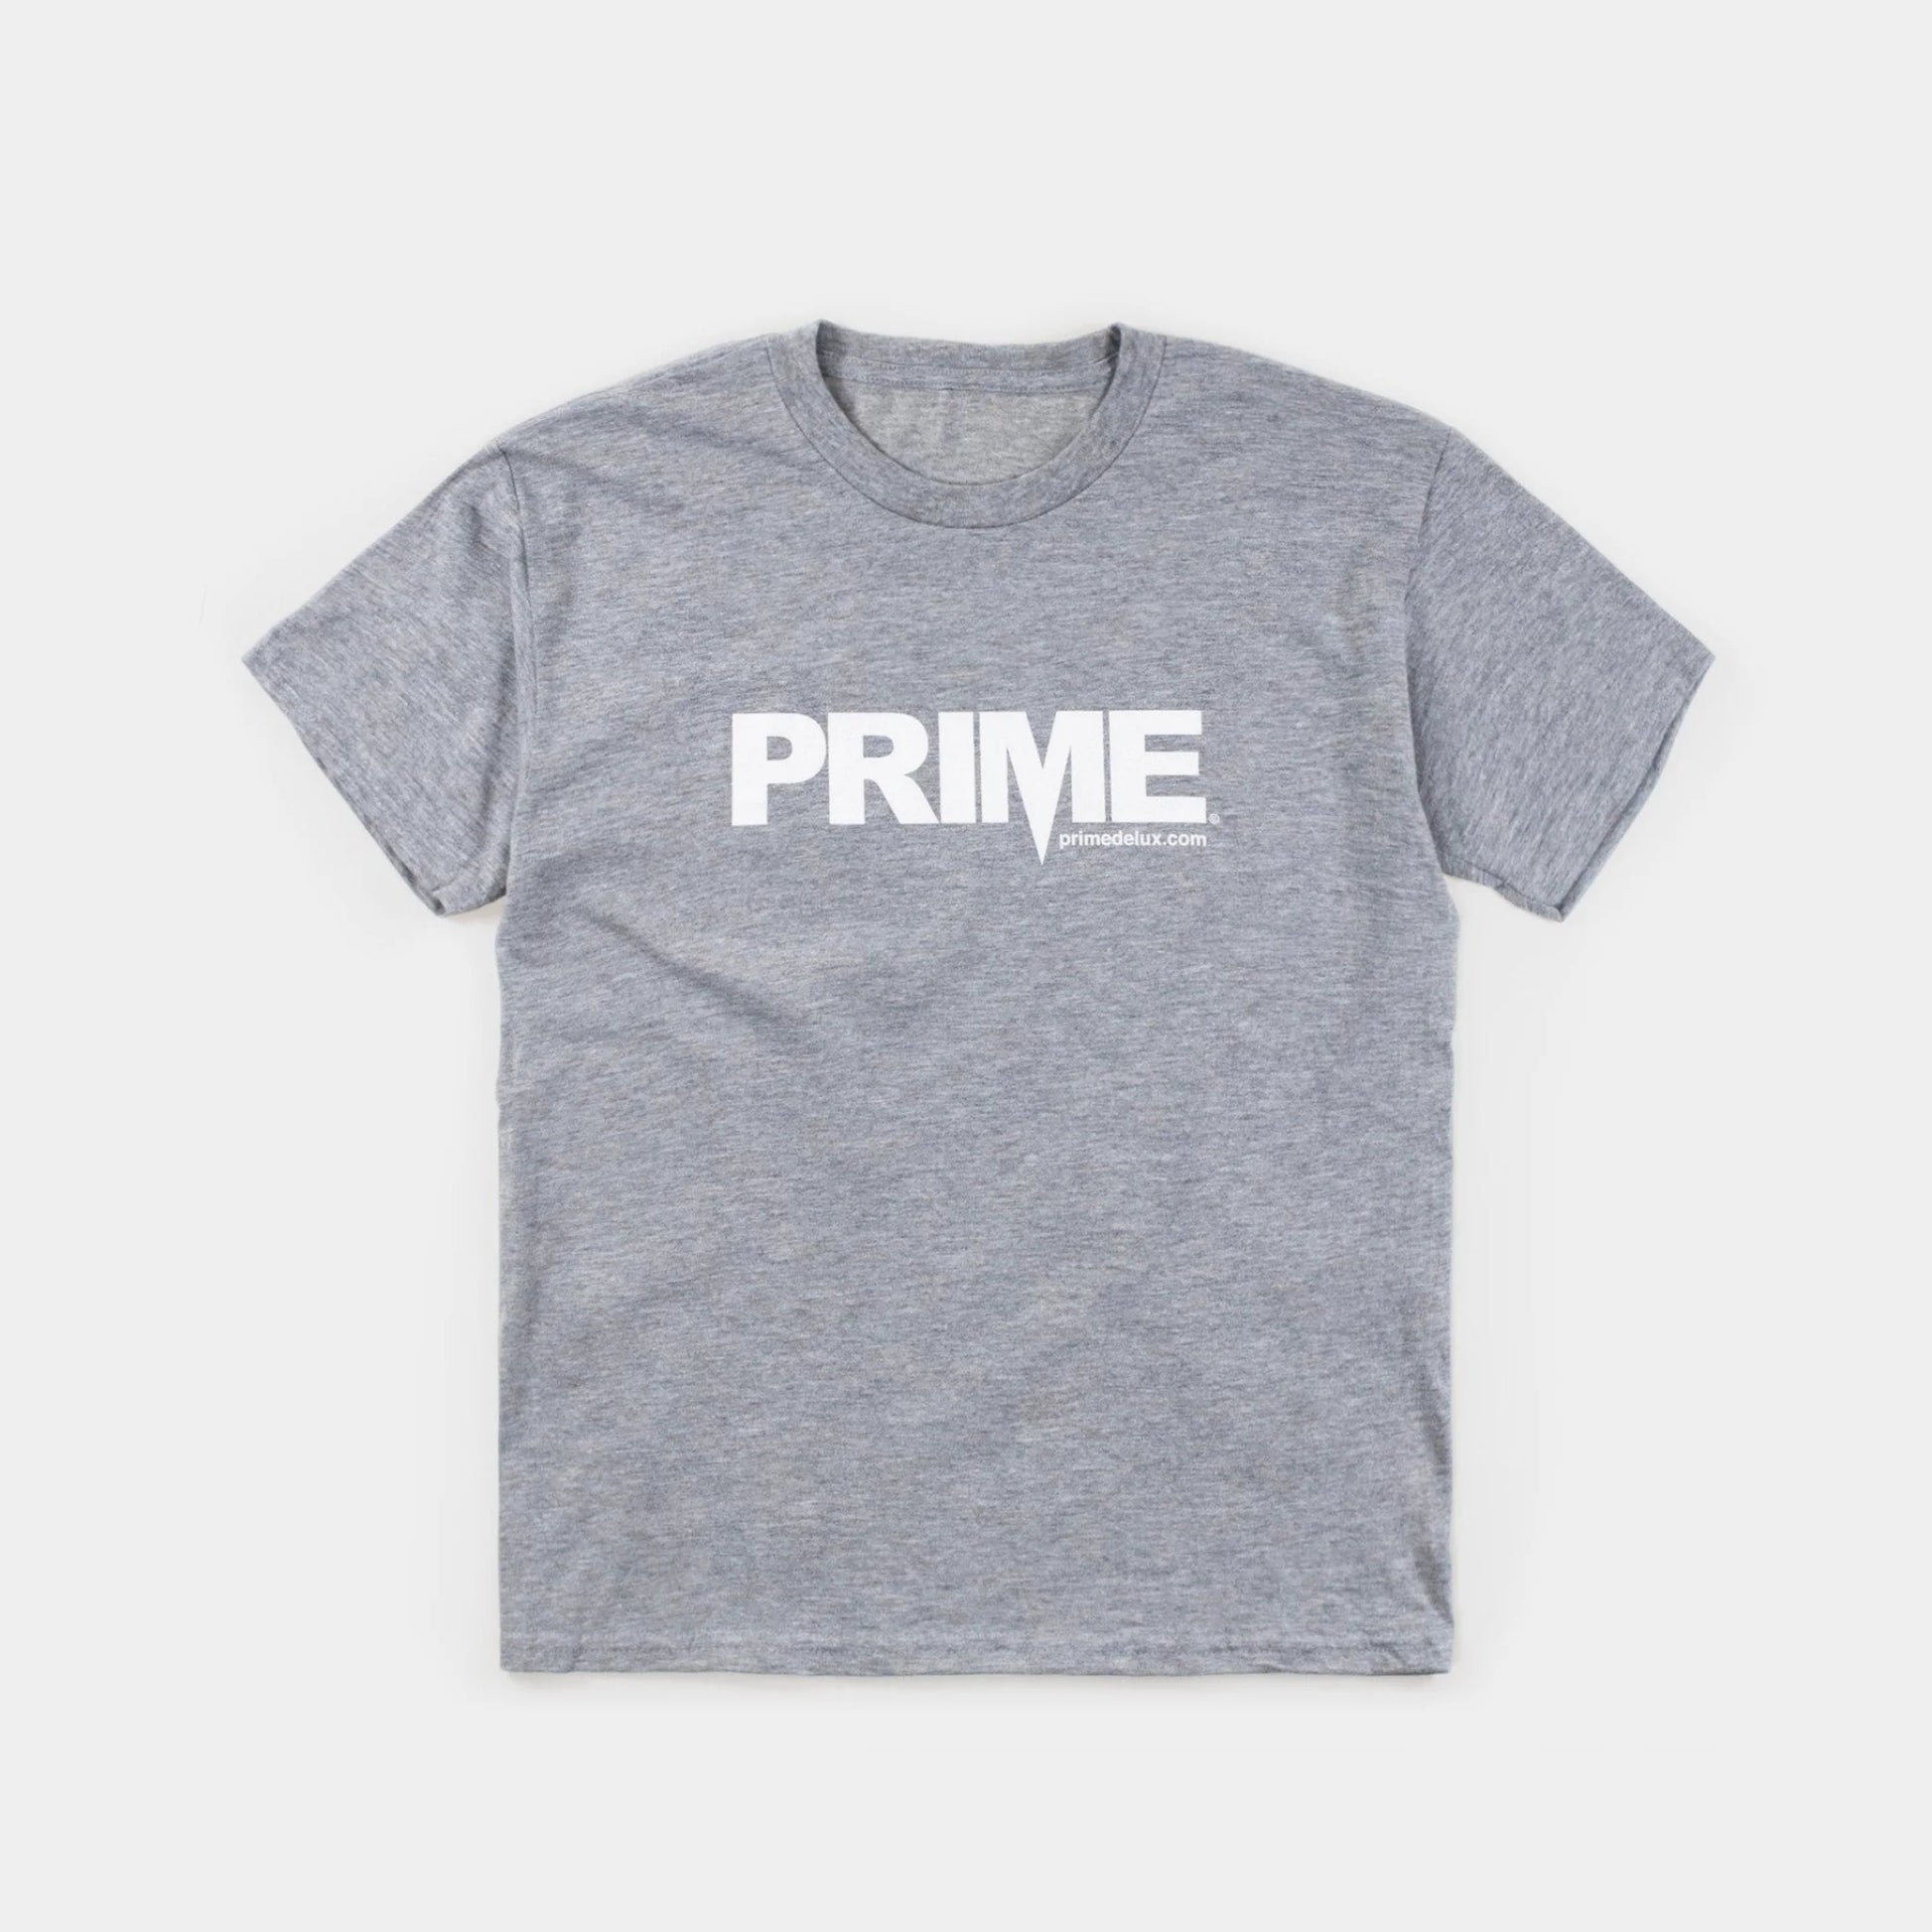 Prime Delux OG Logo Kids T Shirt - Sport Grey/ White - Prime Delux Store